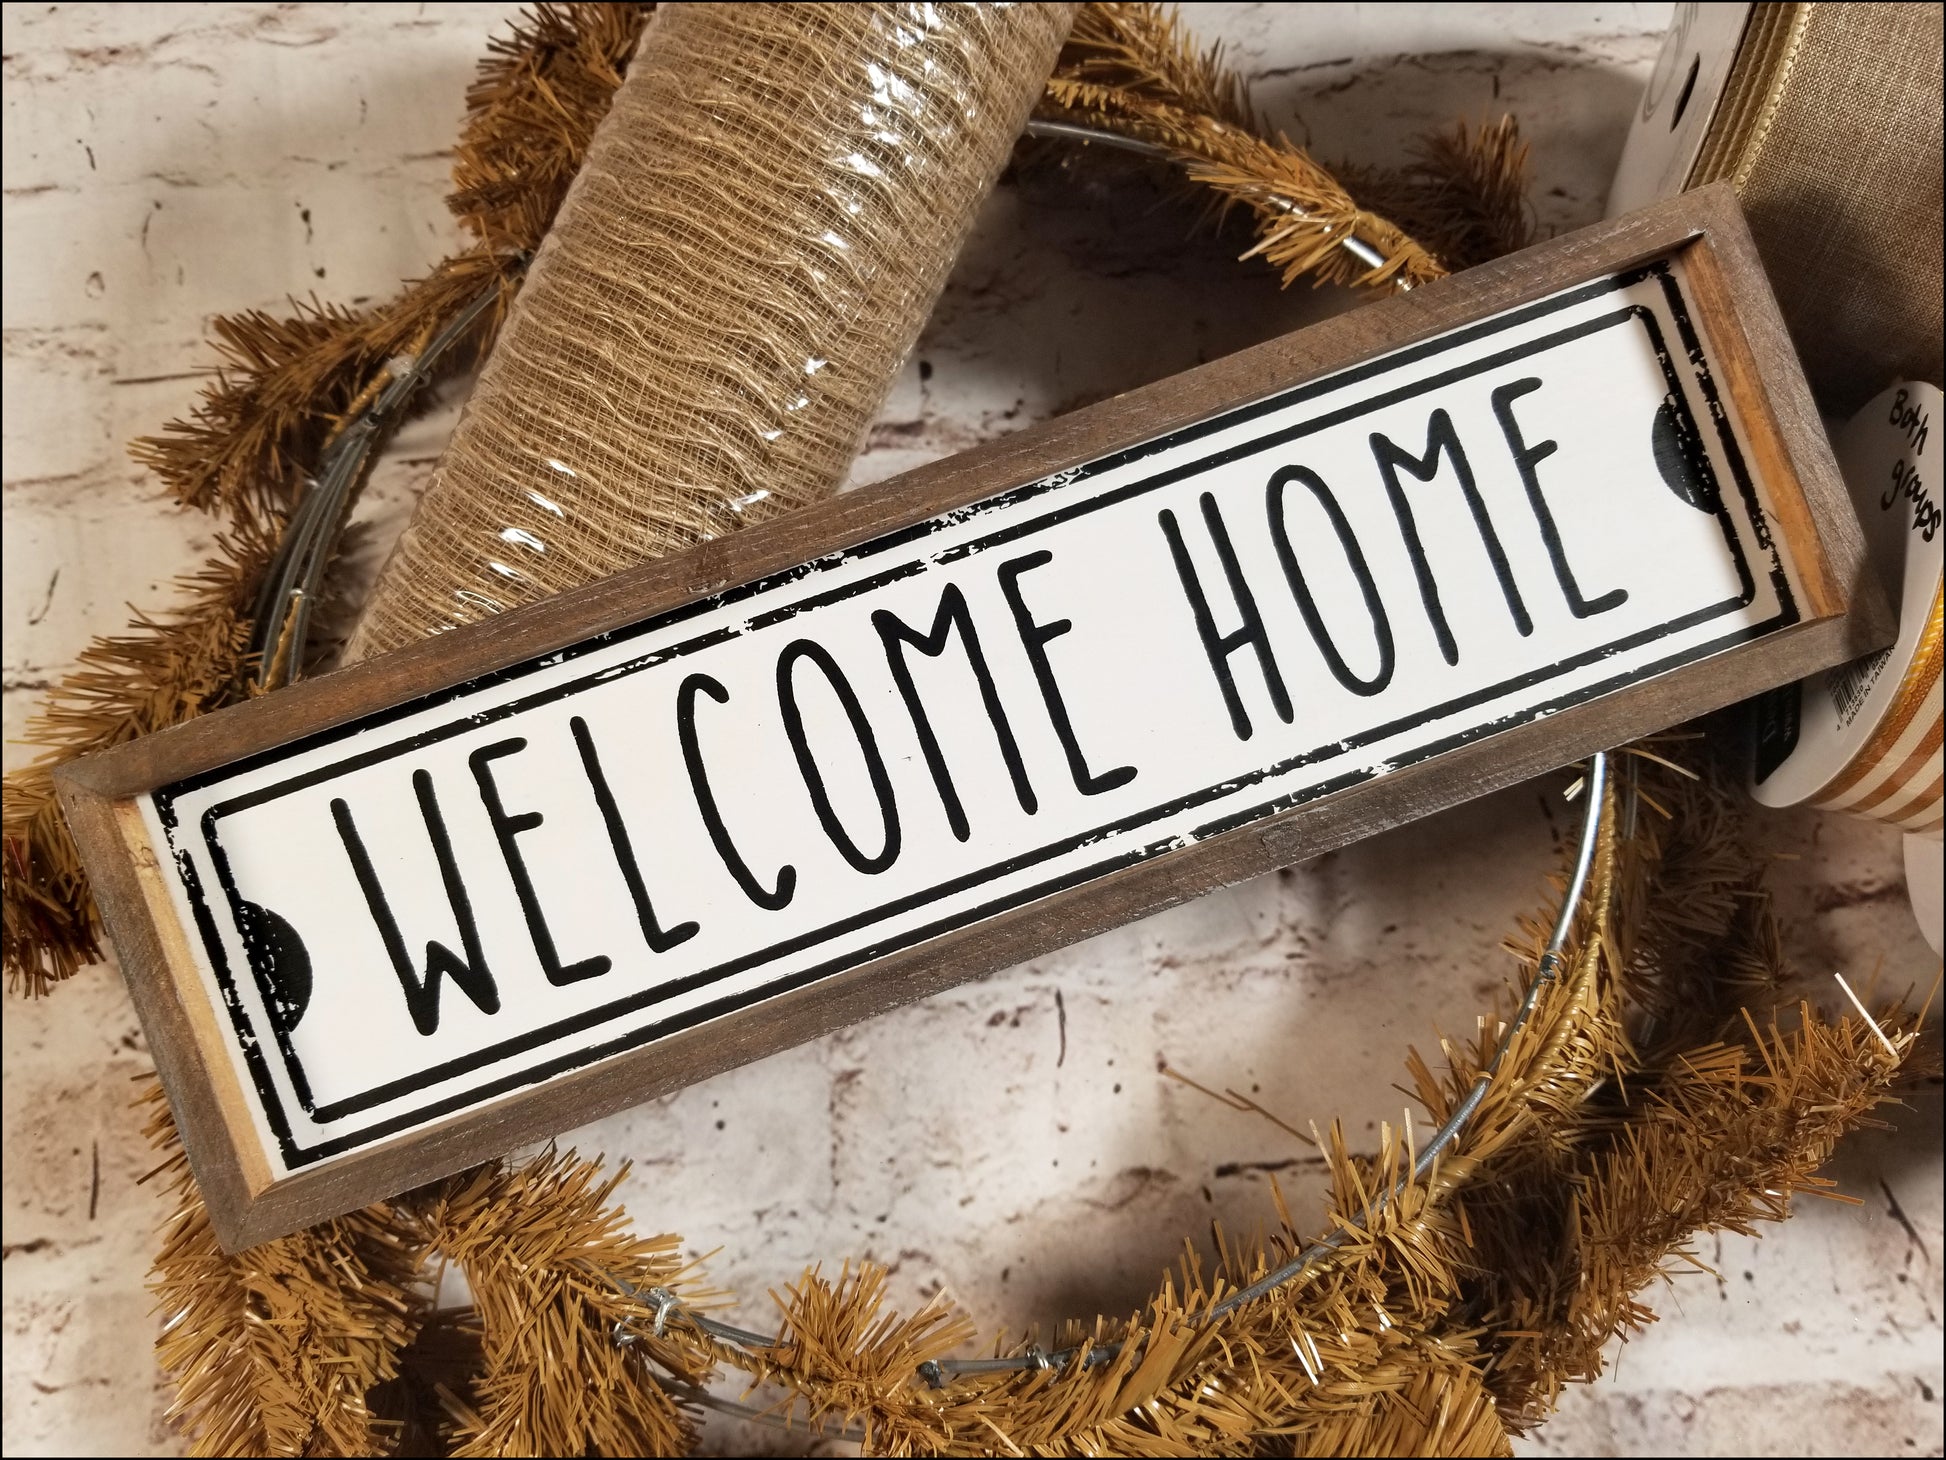 Welcome Home DIY Wreath Kit | Class Kit - Designer DIY